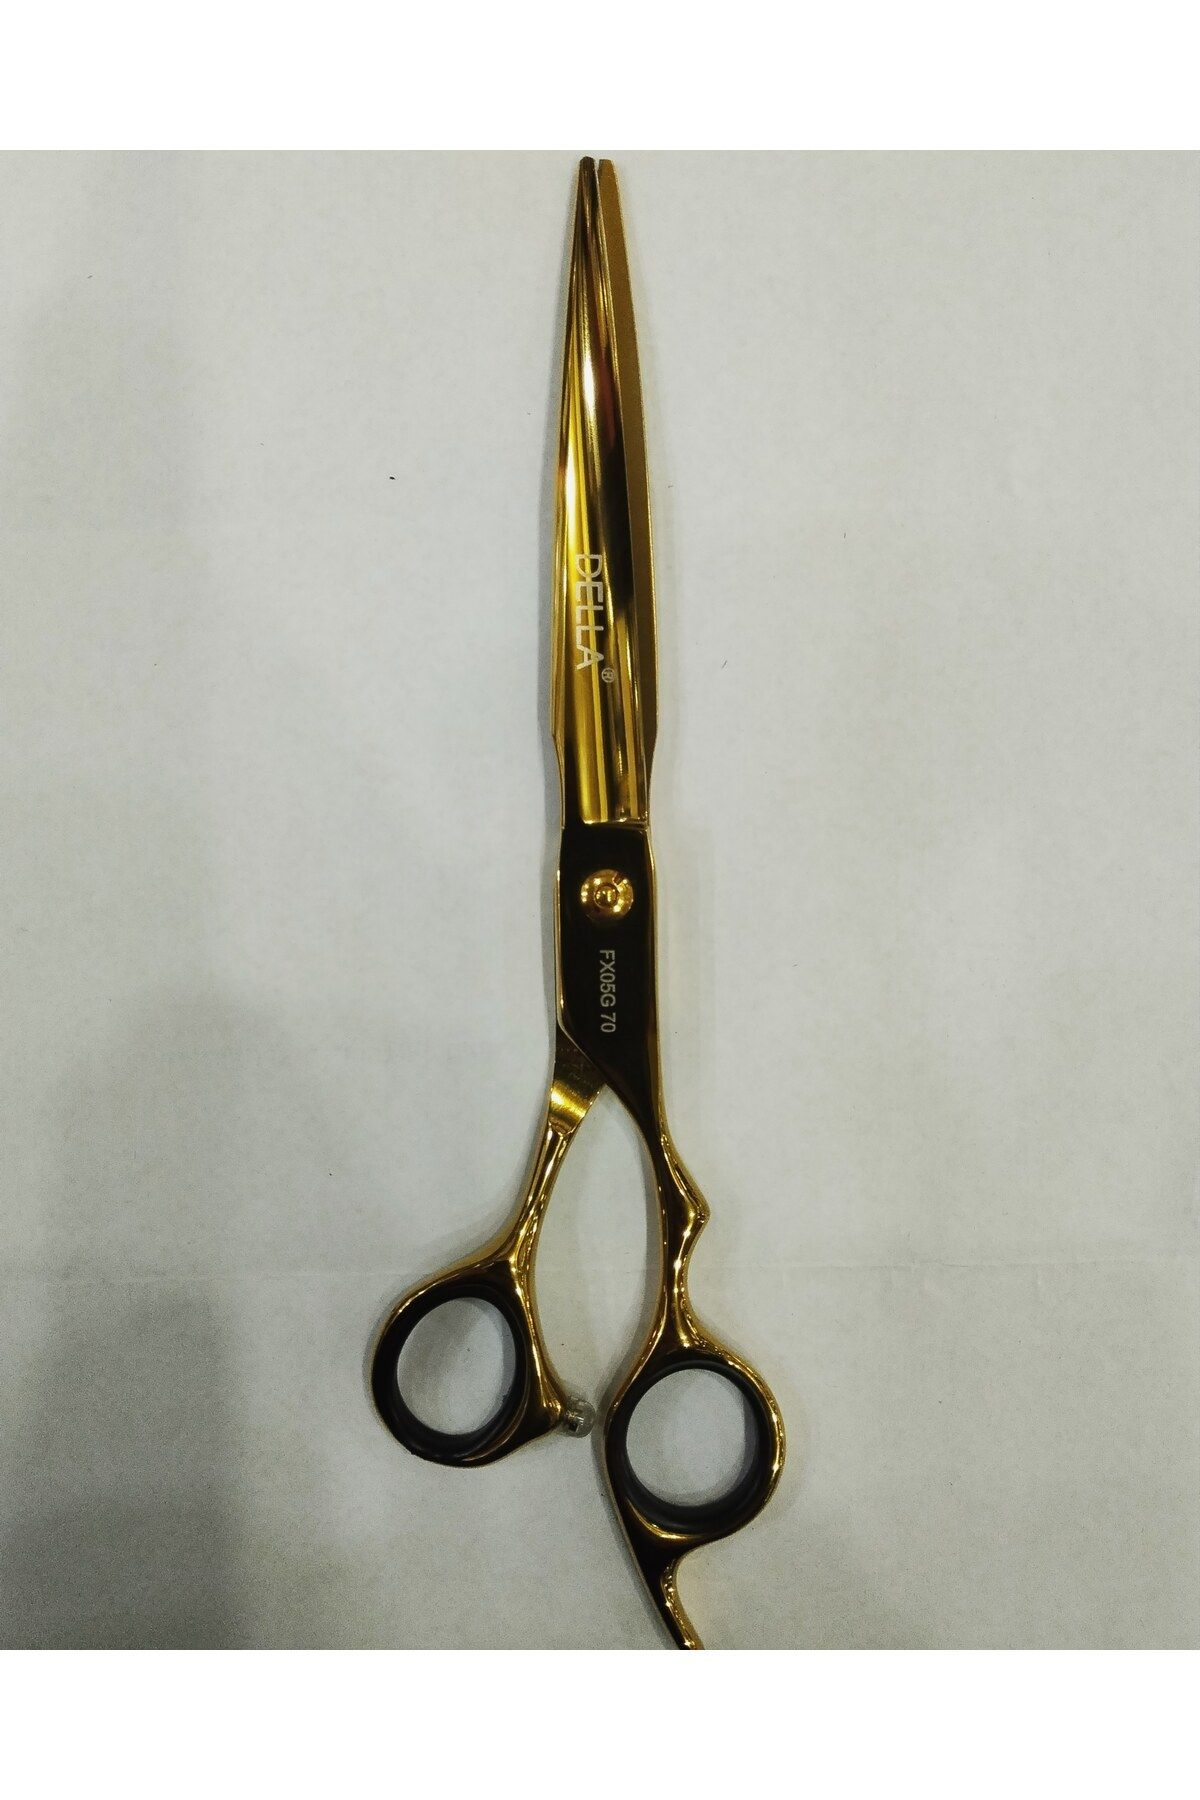 Della Saç Kesim Makası Berber ve Kuaför Makası Titanyum Gold FX05G 7,0 inç